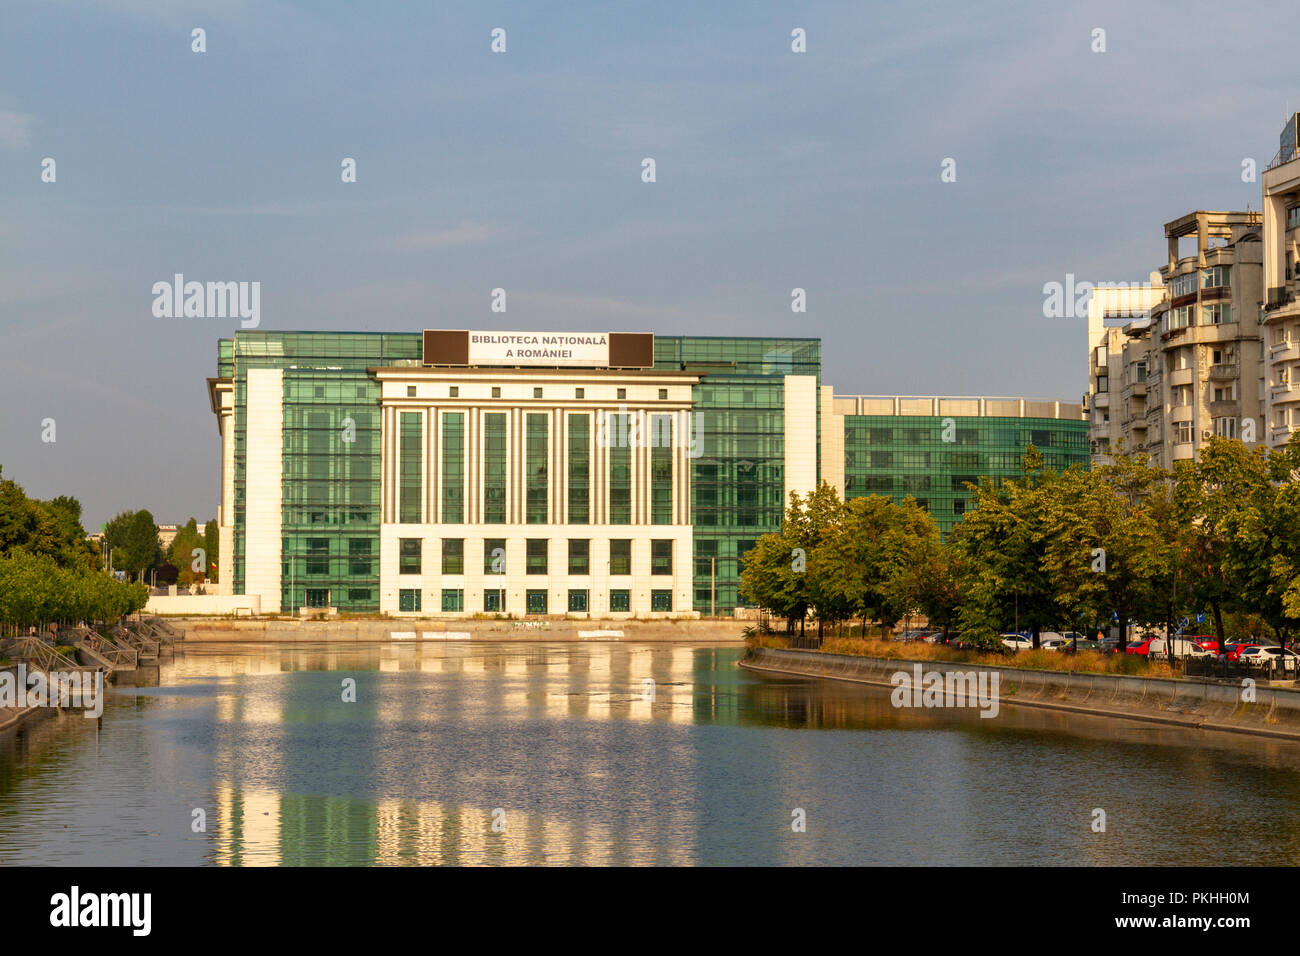 Die nationale Bibliothek von Rumänien (Biblioteca Națională a României) entlang des Flusses Dâmbovița in Bukarest, Rumänien gesehen. Stockfoto